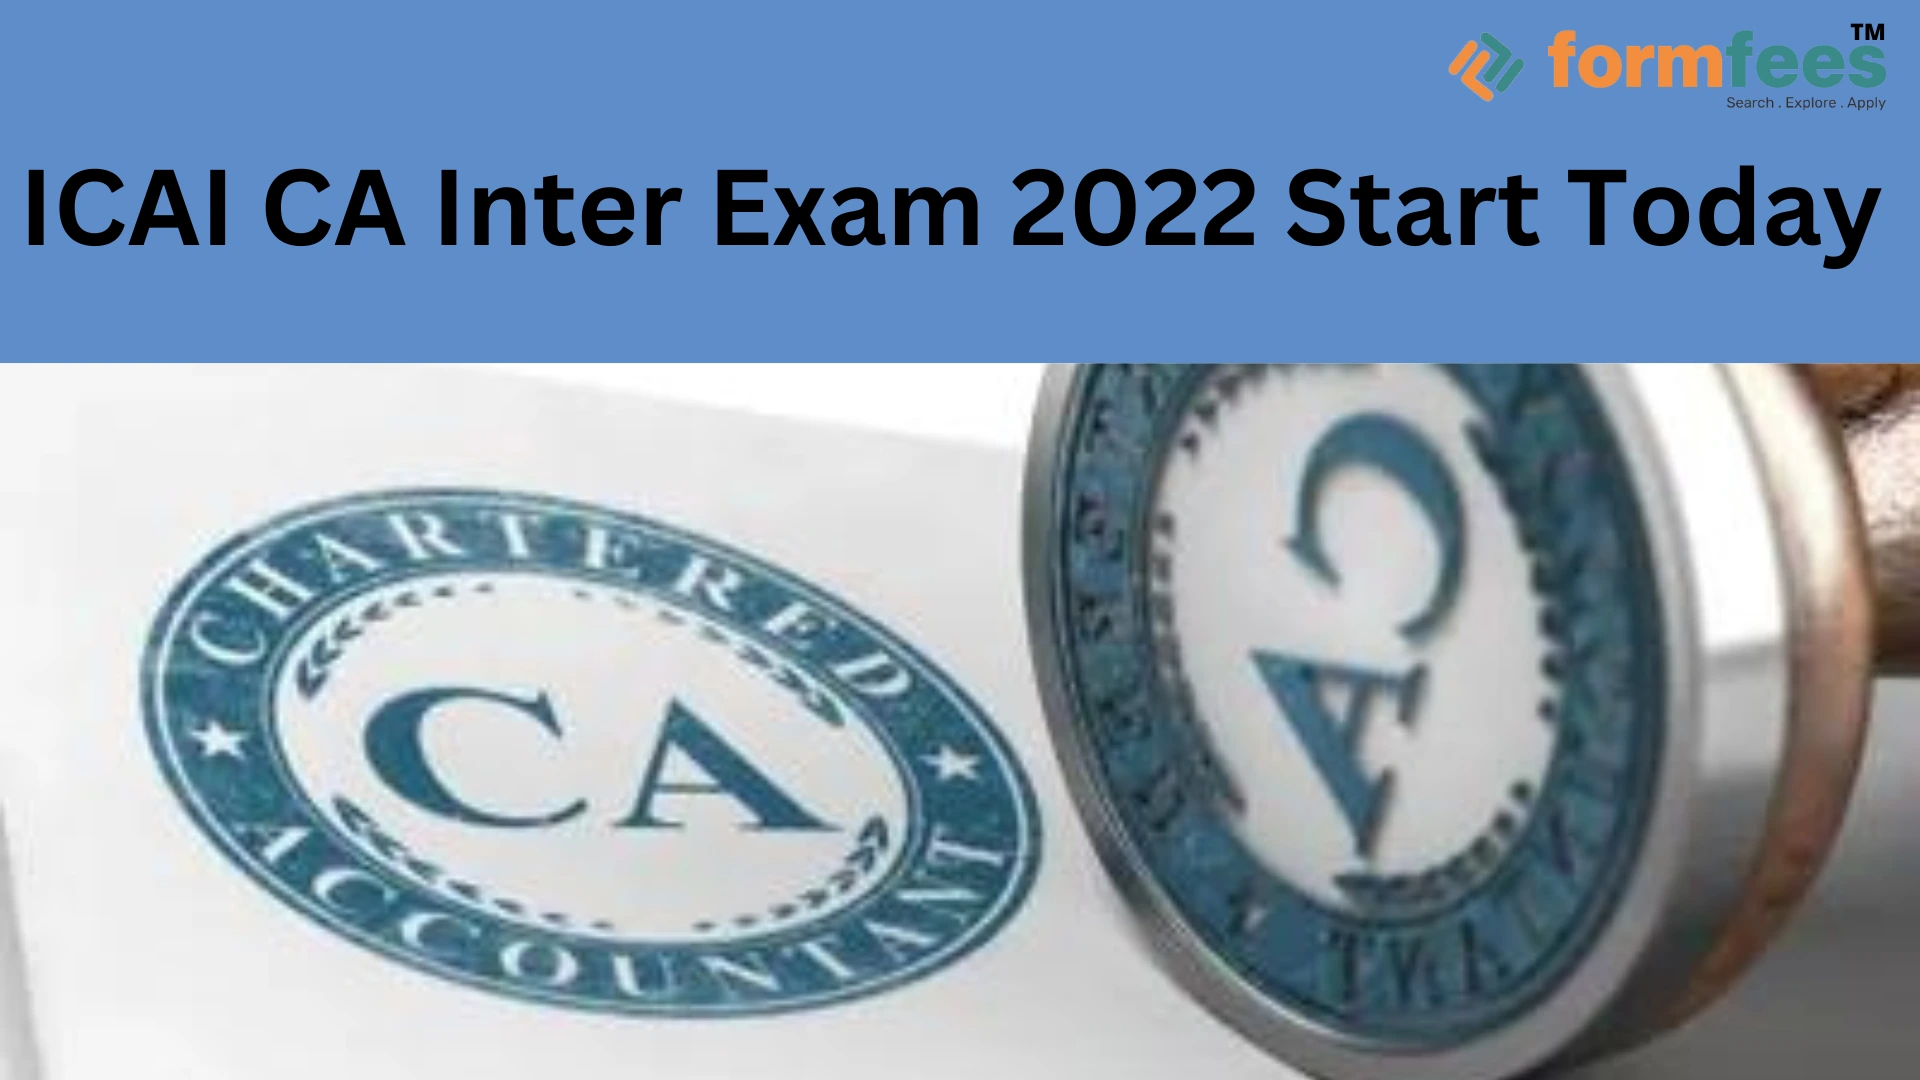 ICAI CA Inter Exam 2022 Starts Today